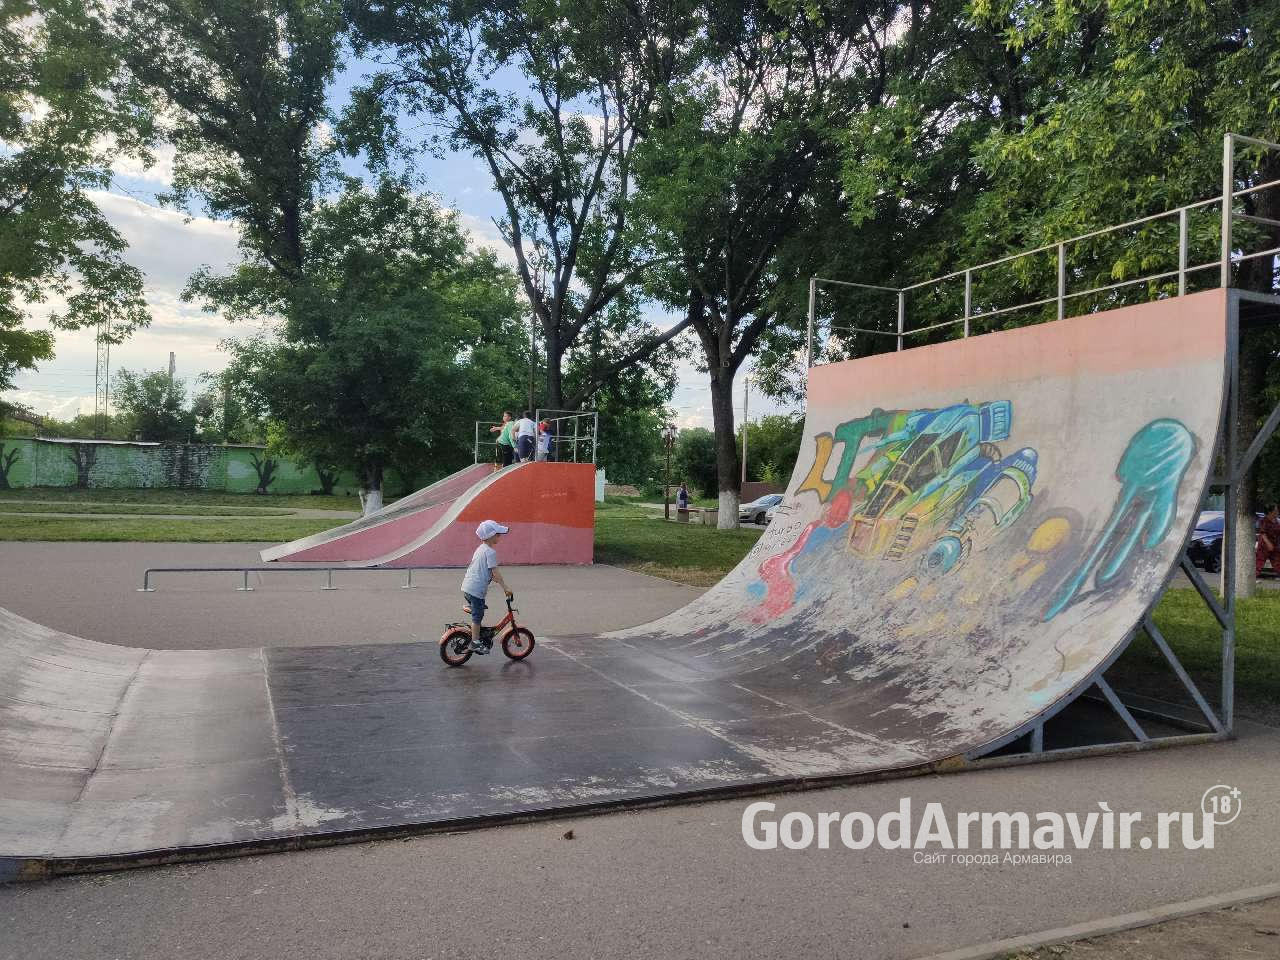 В Армавире построят скейт-парк стоимостью 10 млн руб